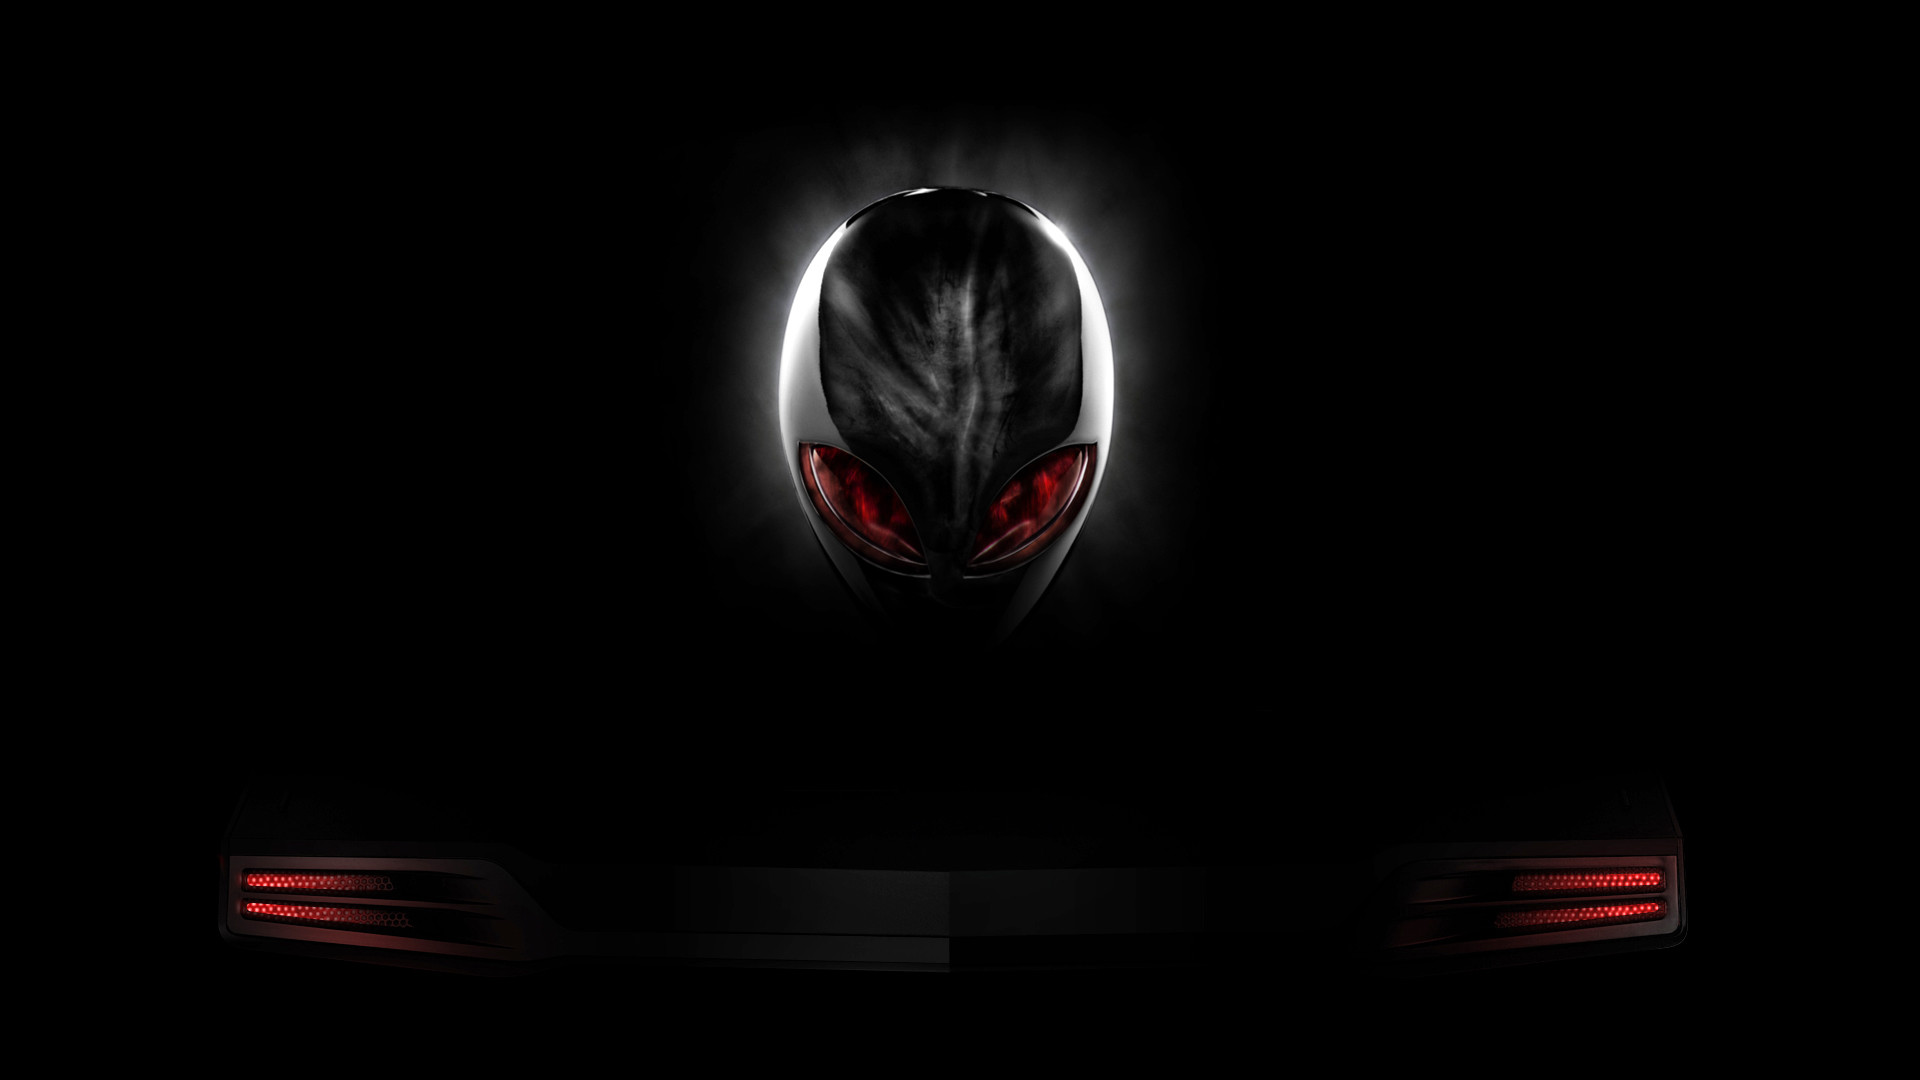 1920x1080 alienware red eyes logo black background